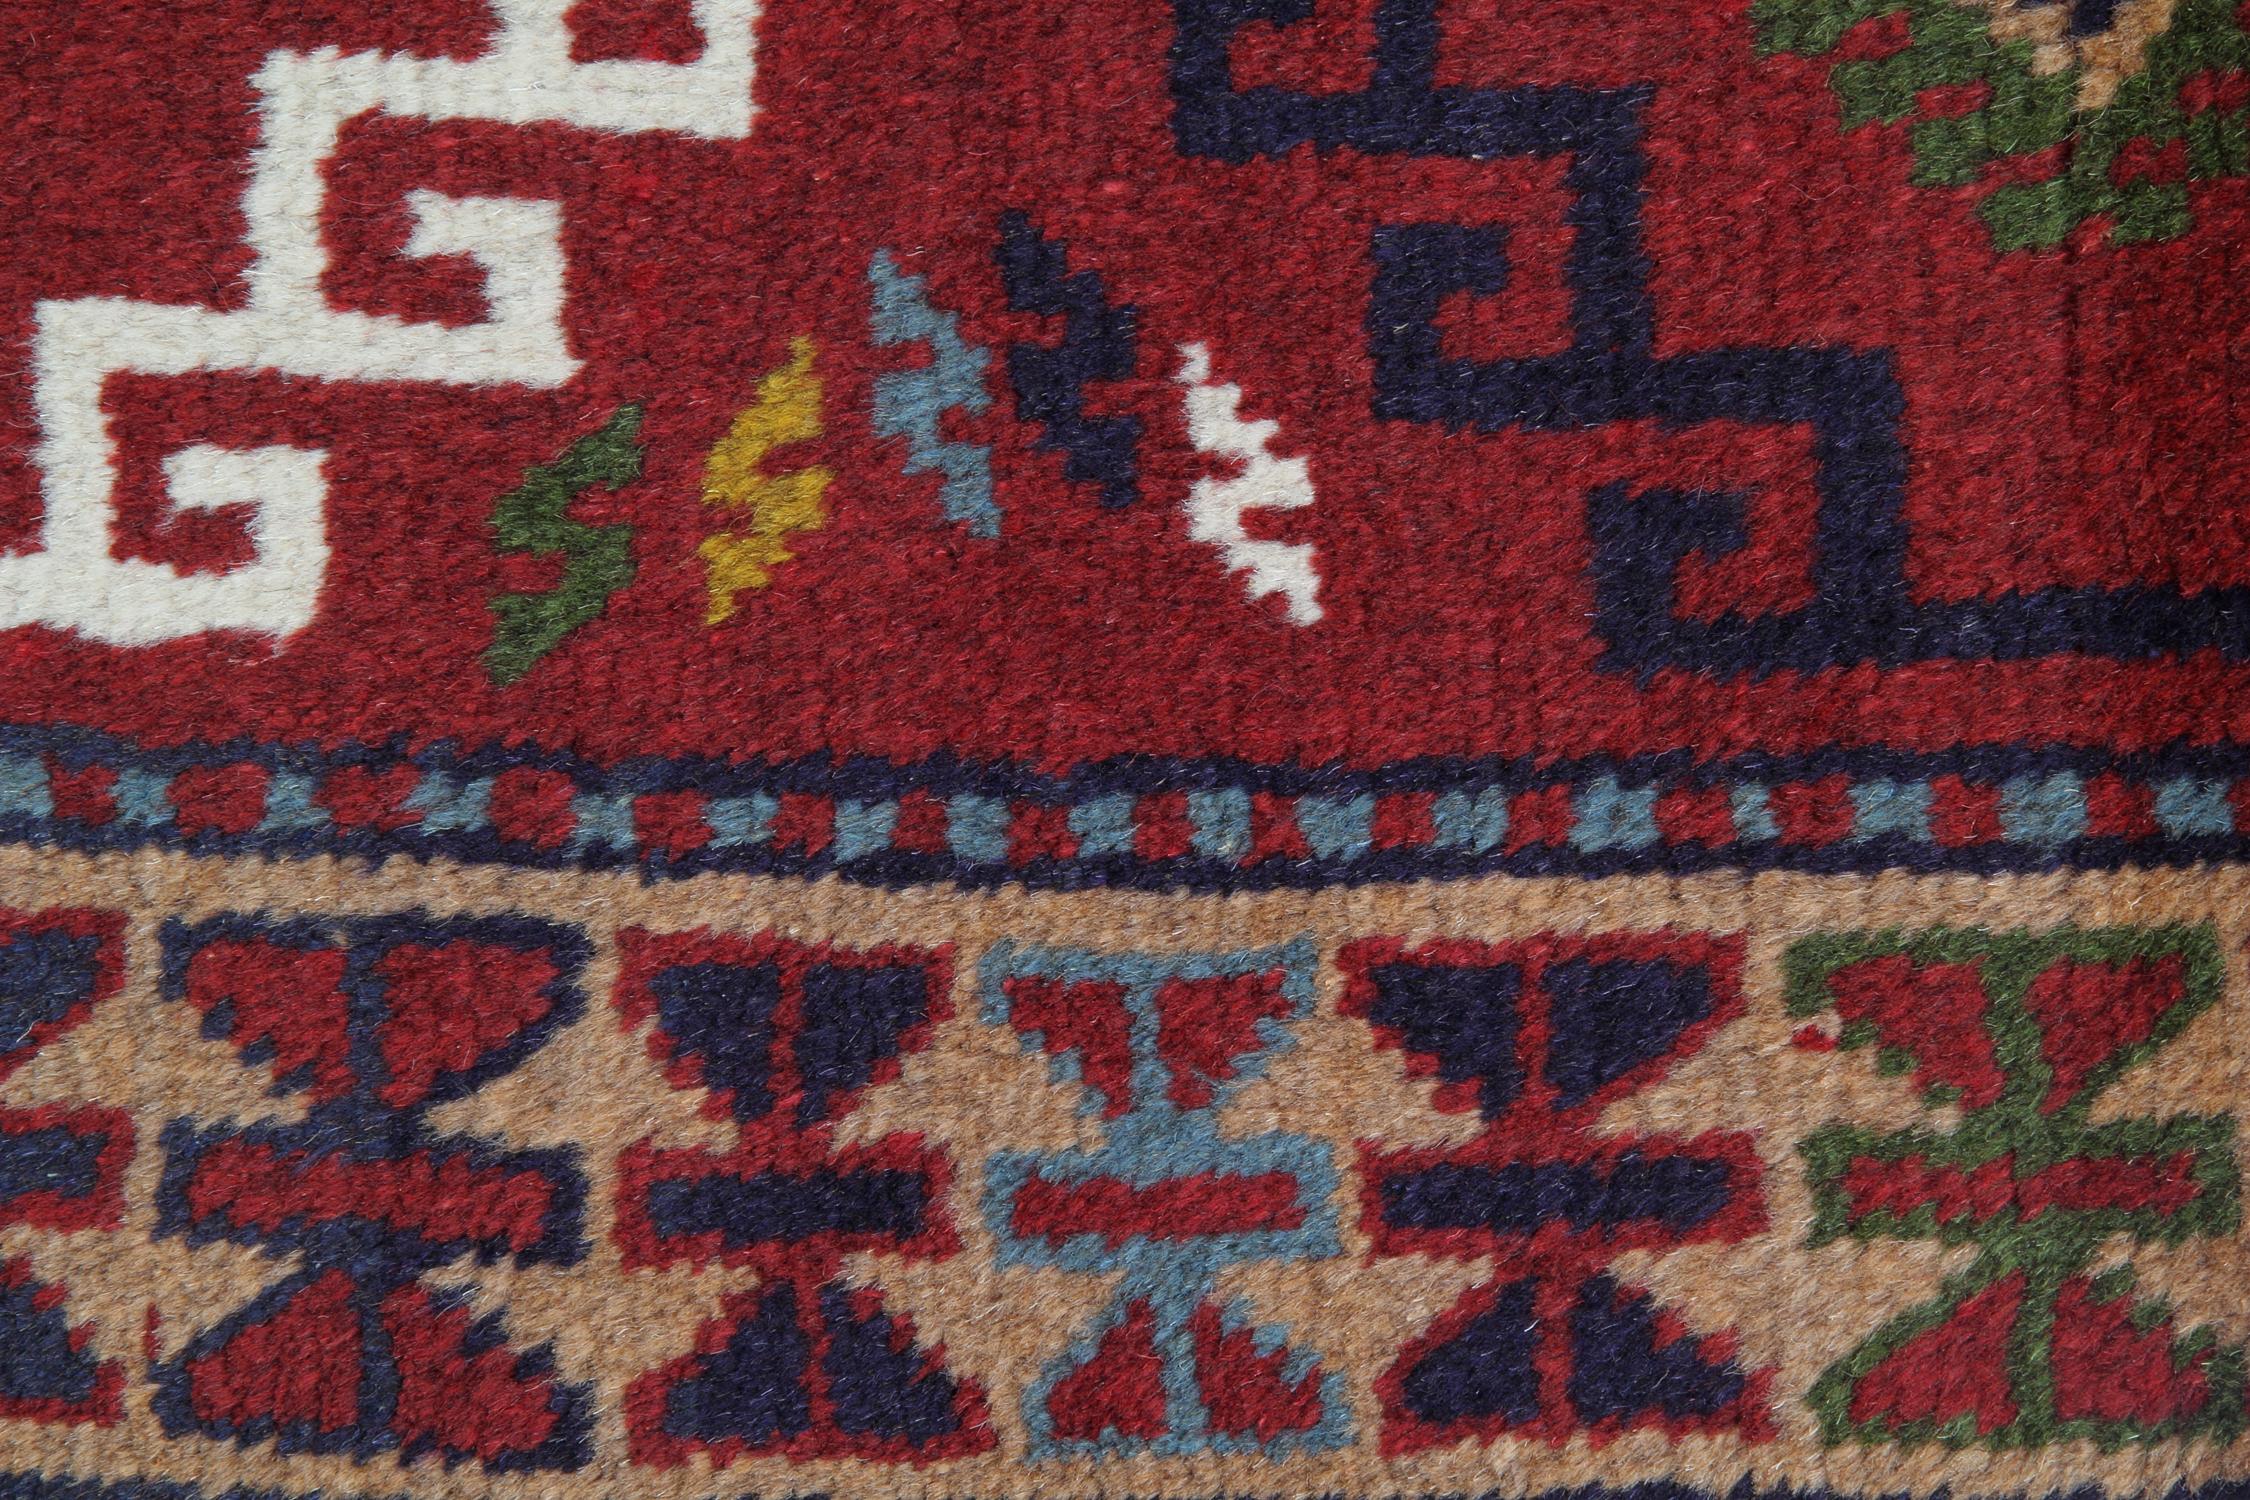 Azerbaijani Small Geometric Runner Rug Vintage Handwoven Tribal Traditional Carpet